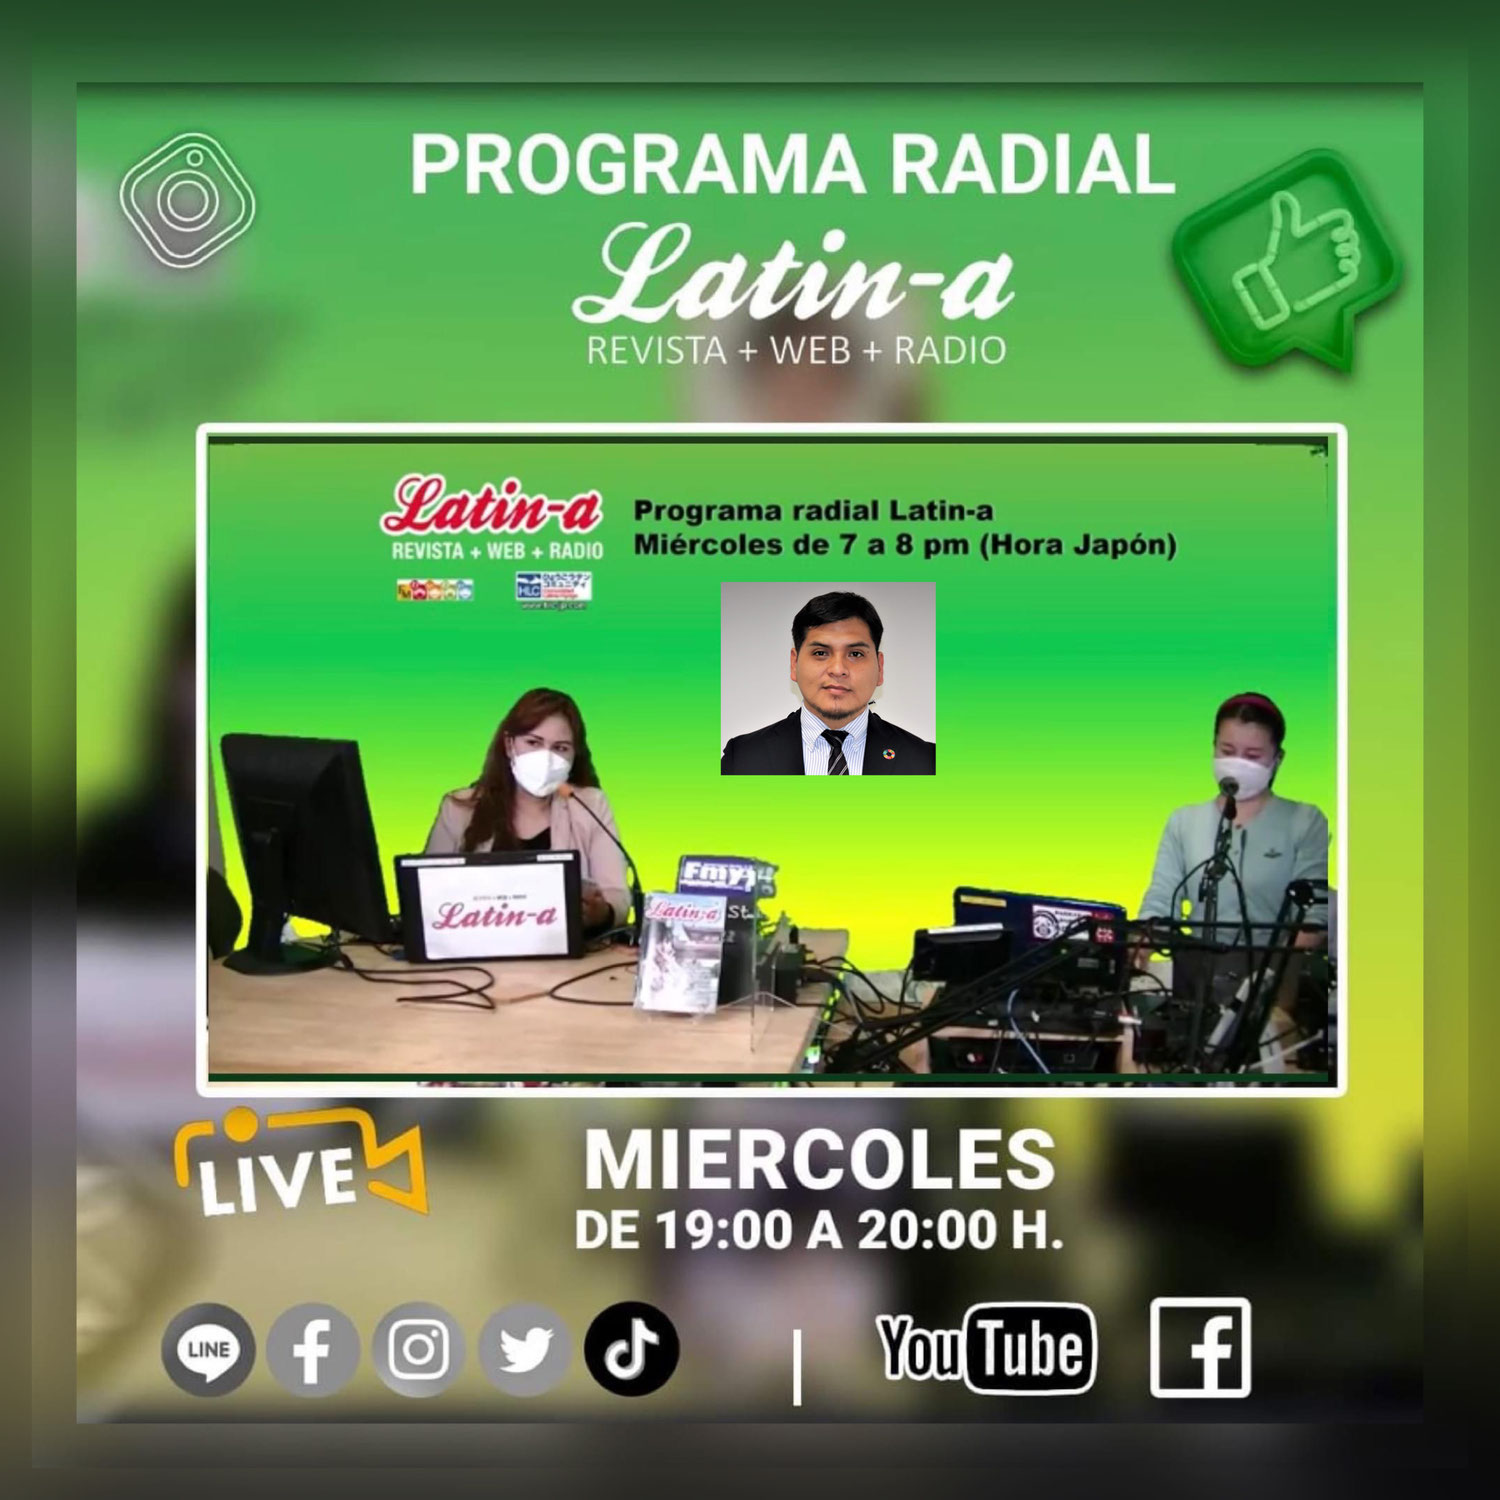 ◆◆Programa radial Latin-a /ラジオ番組ラティーナ◆◆